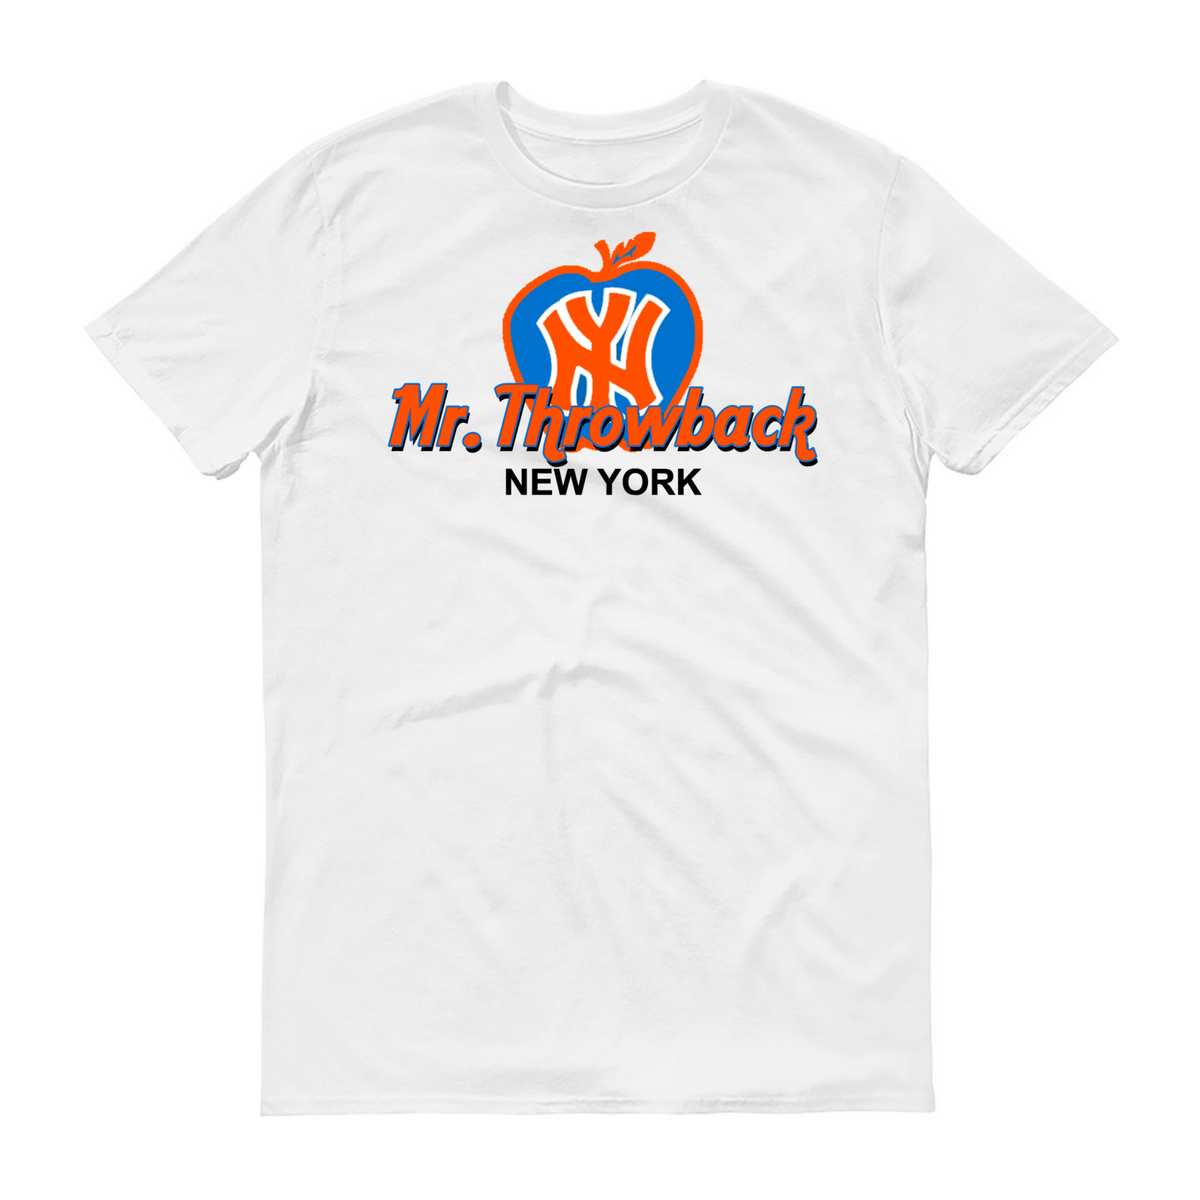 Costanza Jersey Design – Mr. Throwback NYC